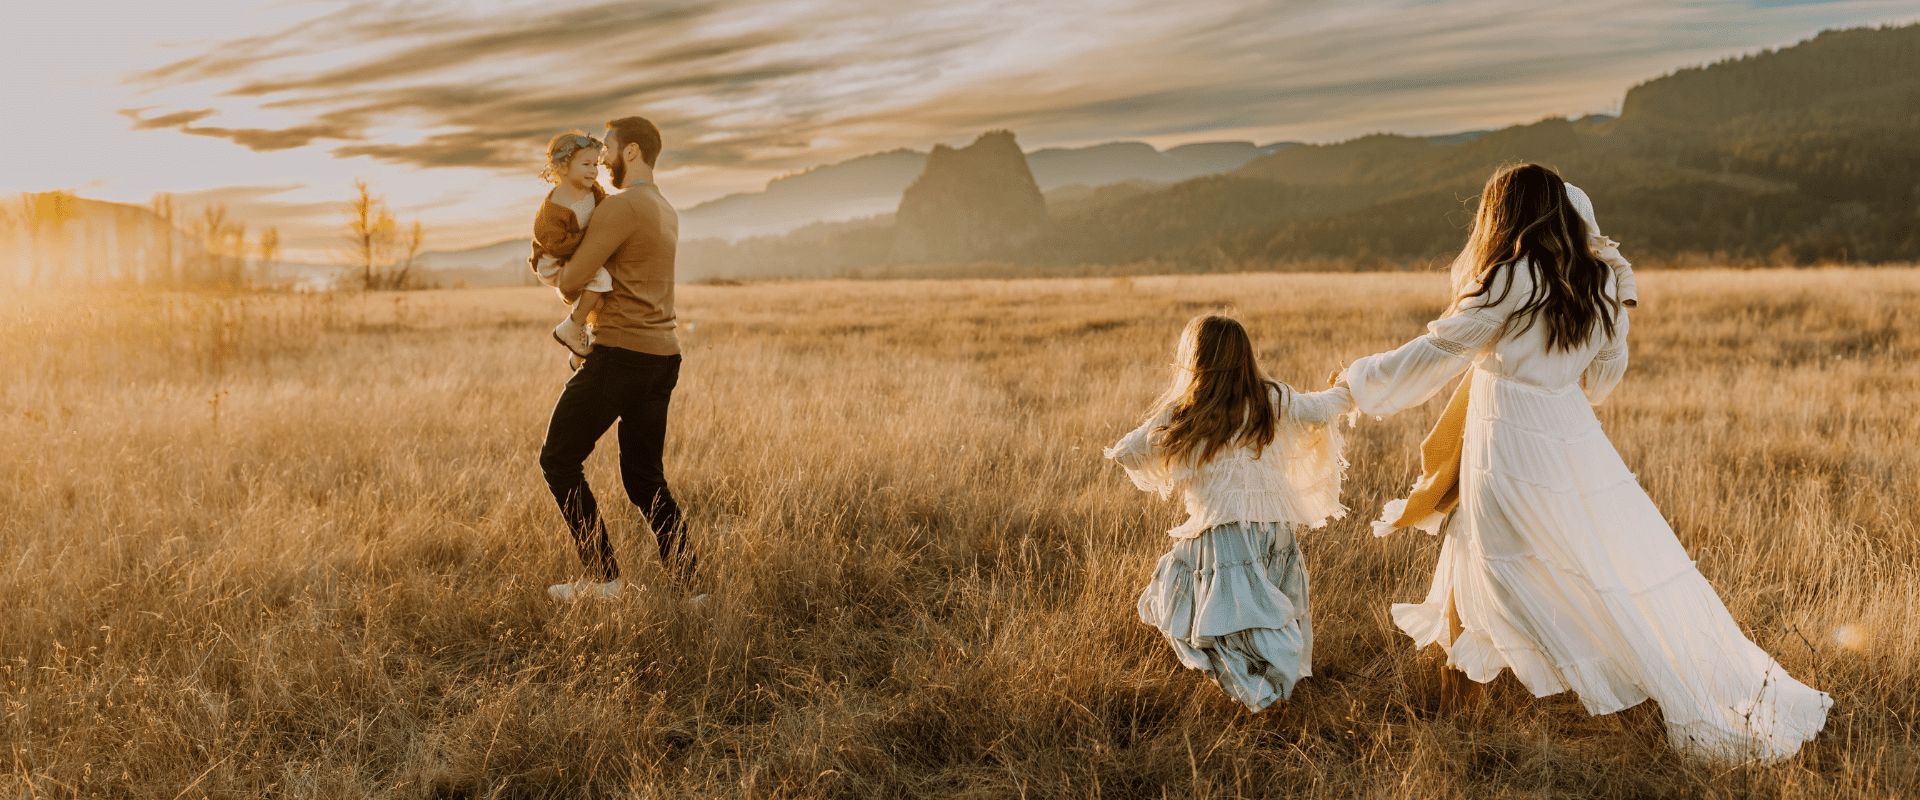 A family walks through a field at sunset.